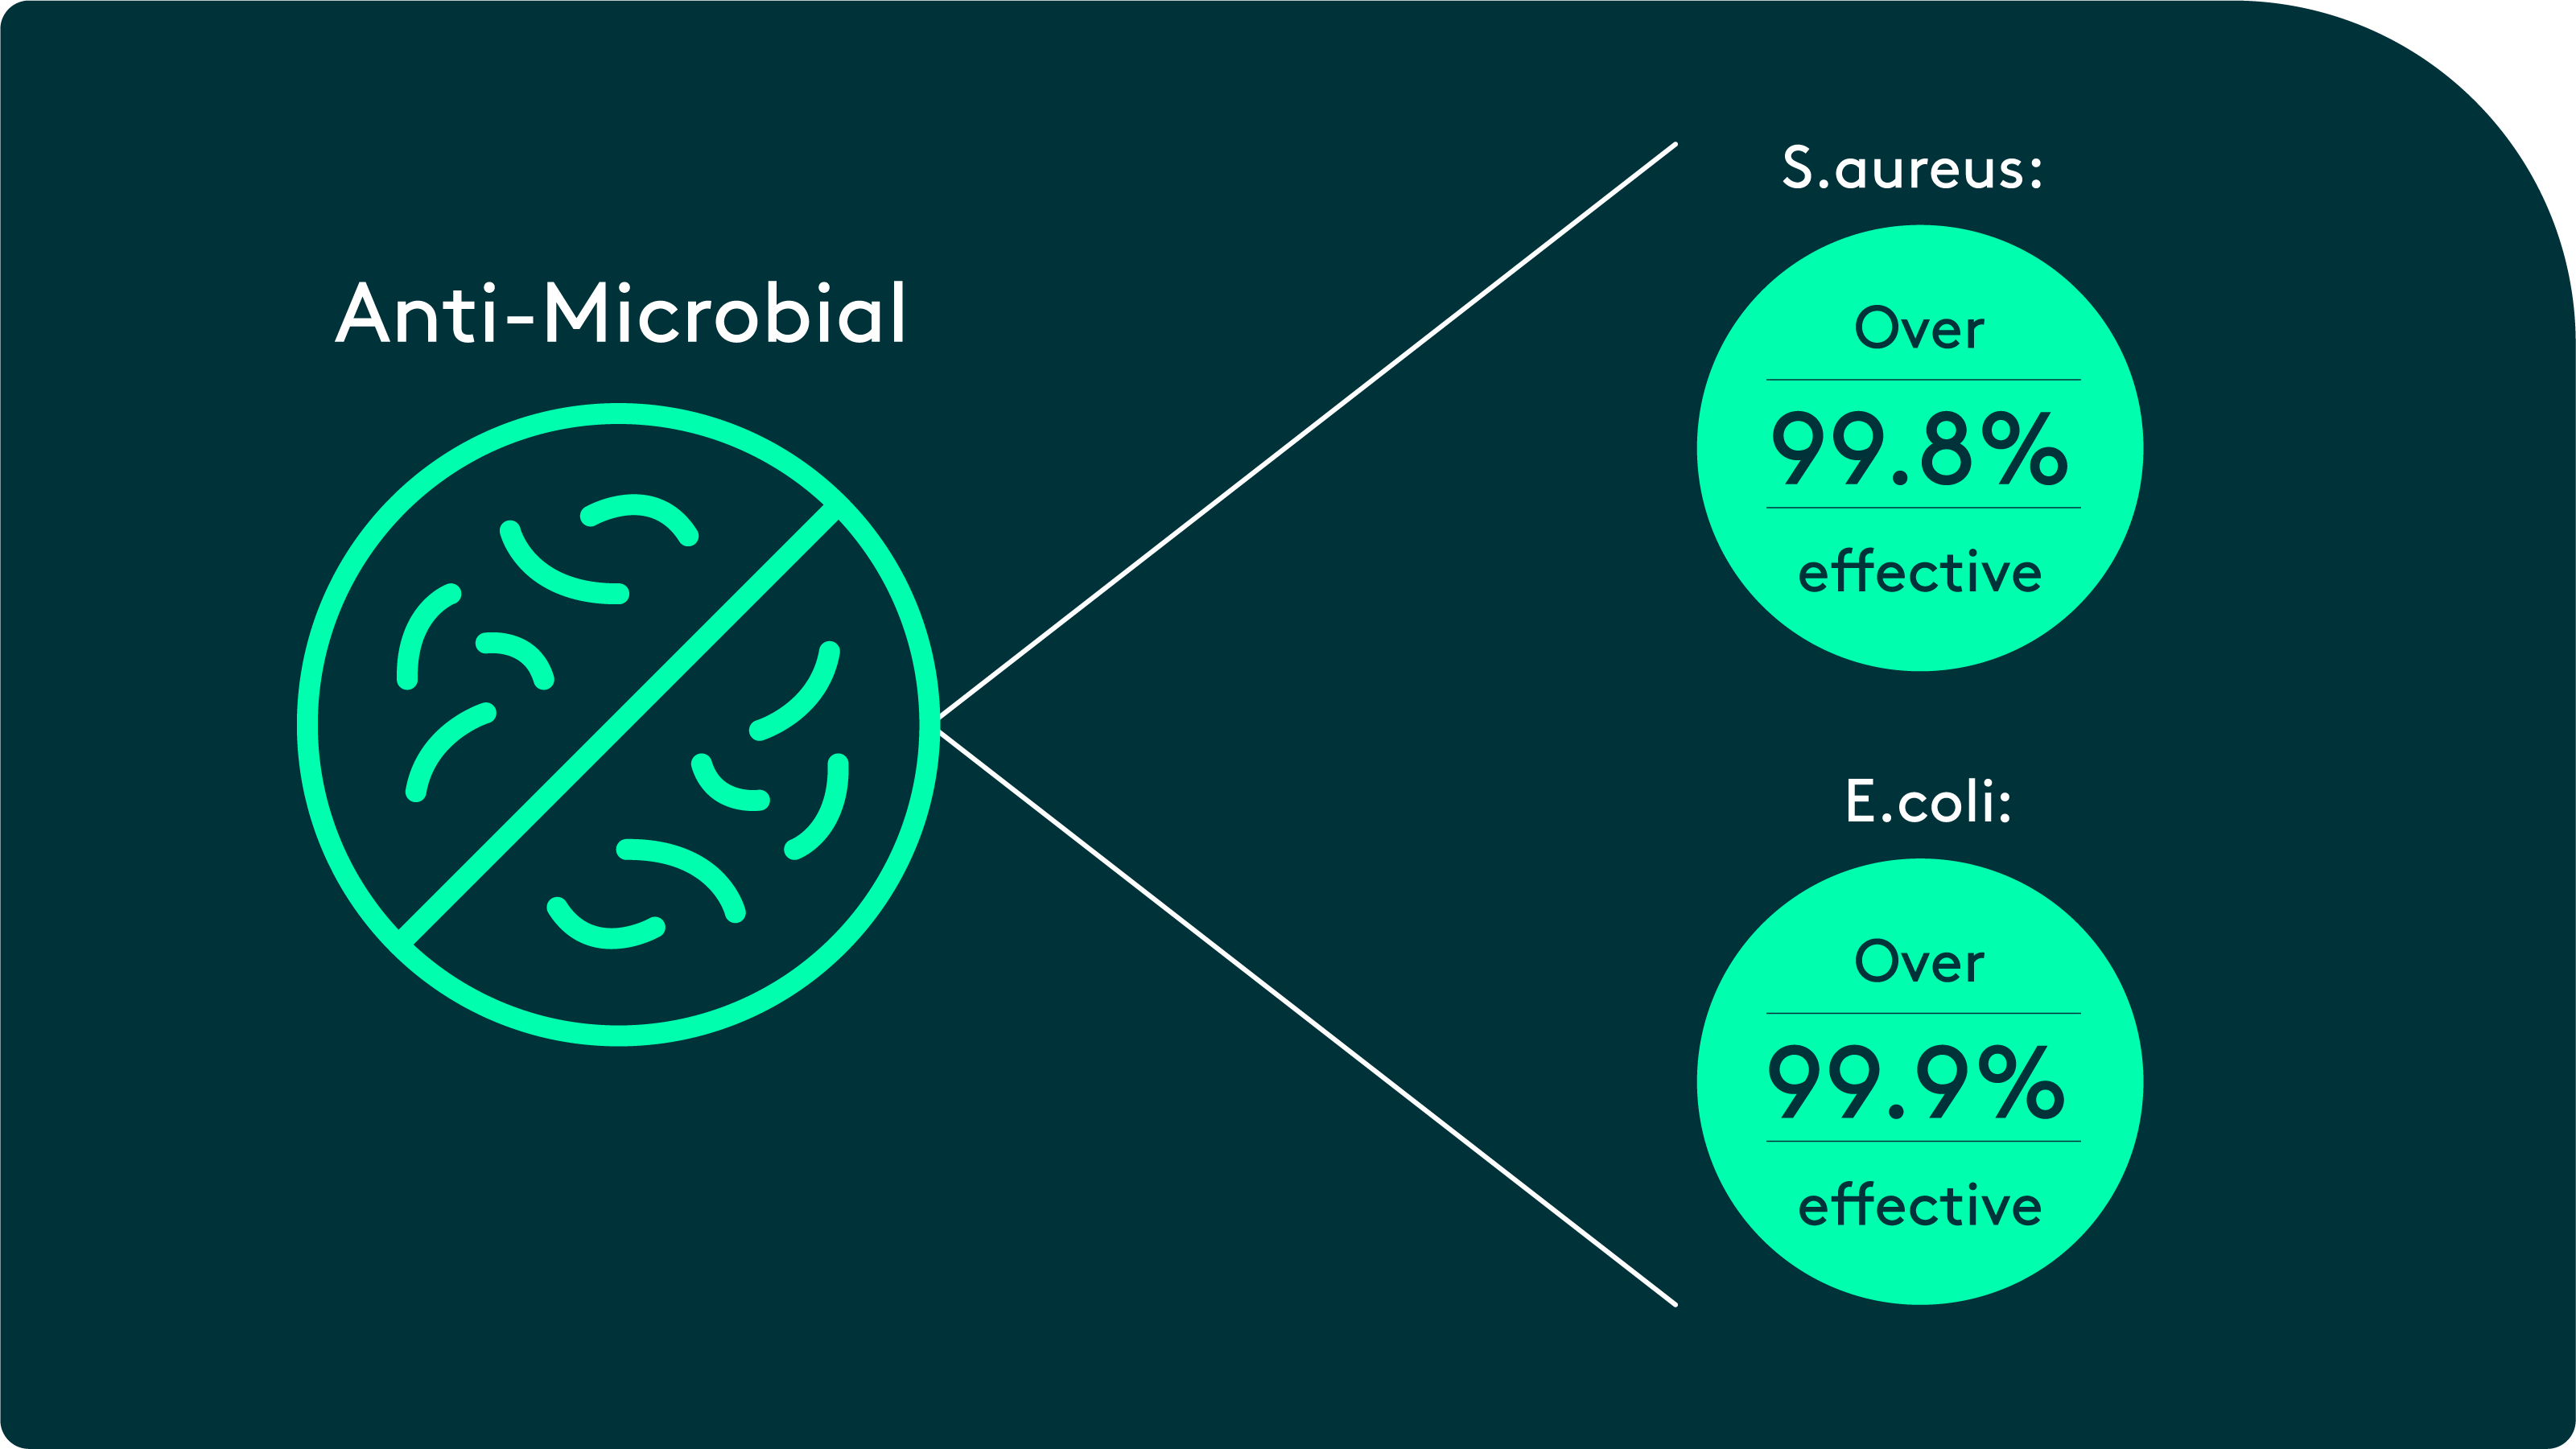 Anti-microbial: Over 99.8% effective against S.aureus & over 99.9% effective against E.coli.